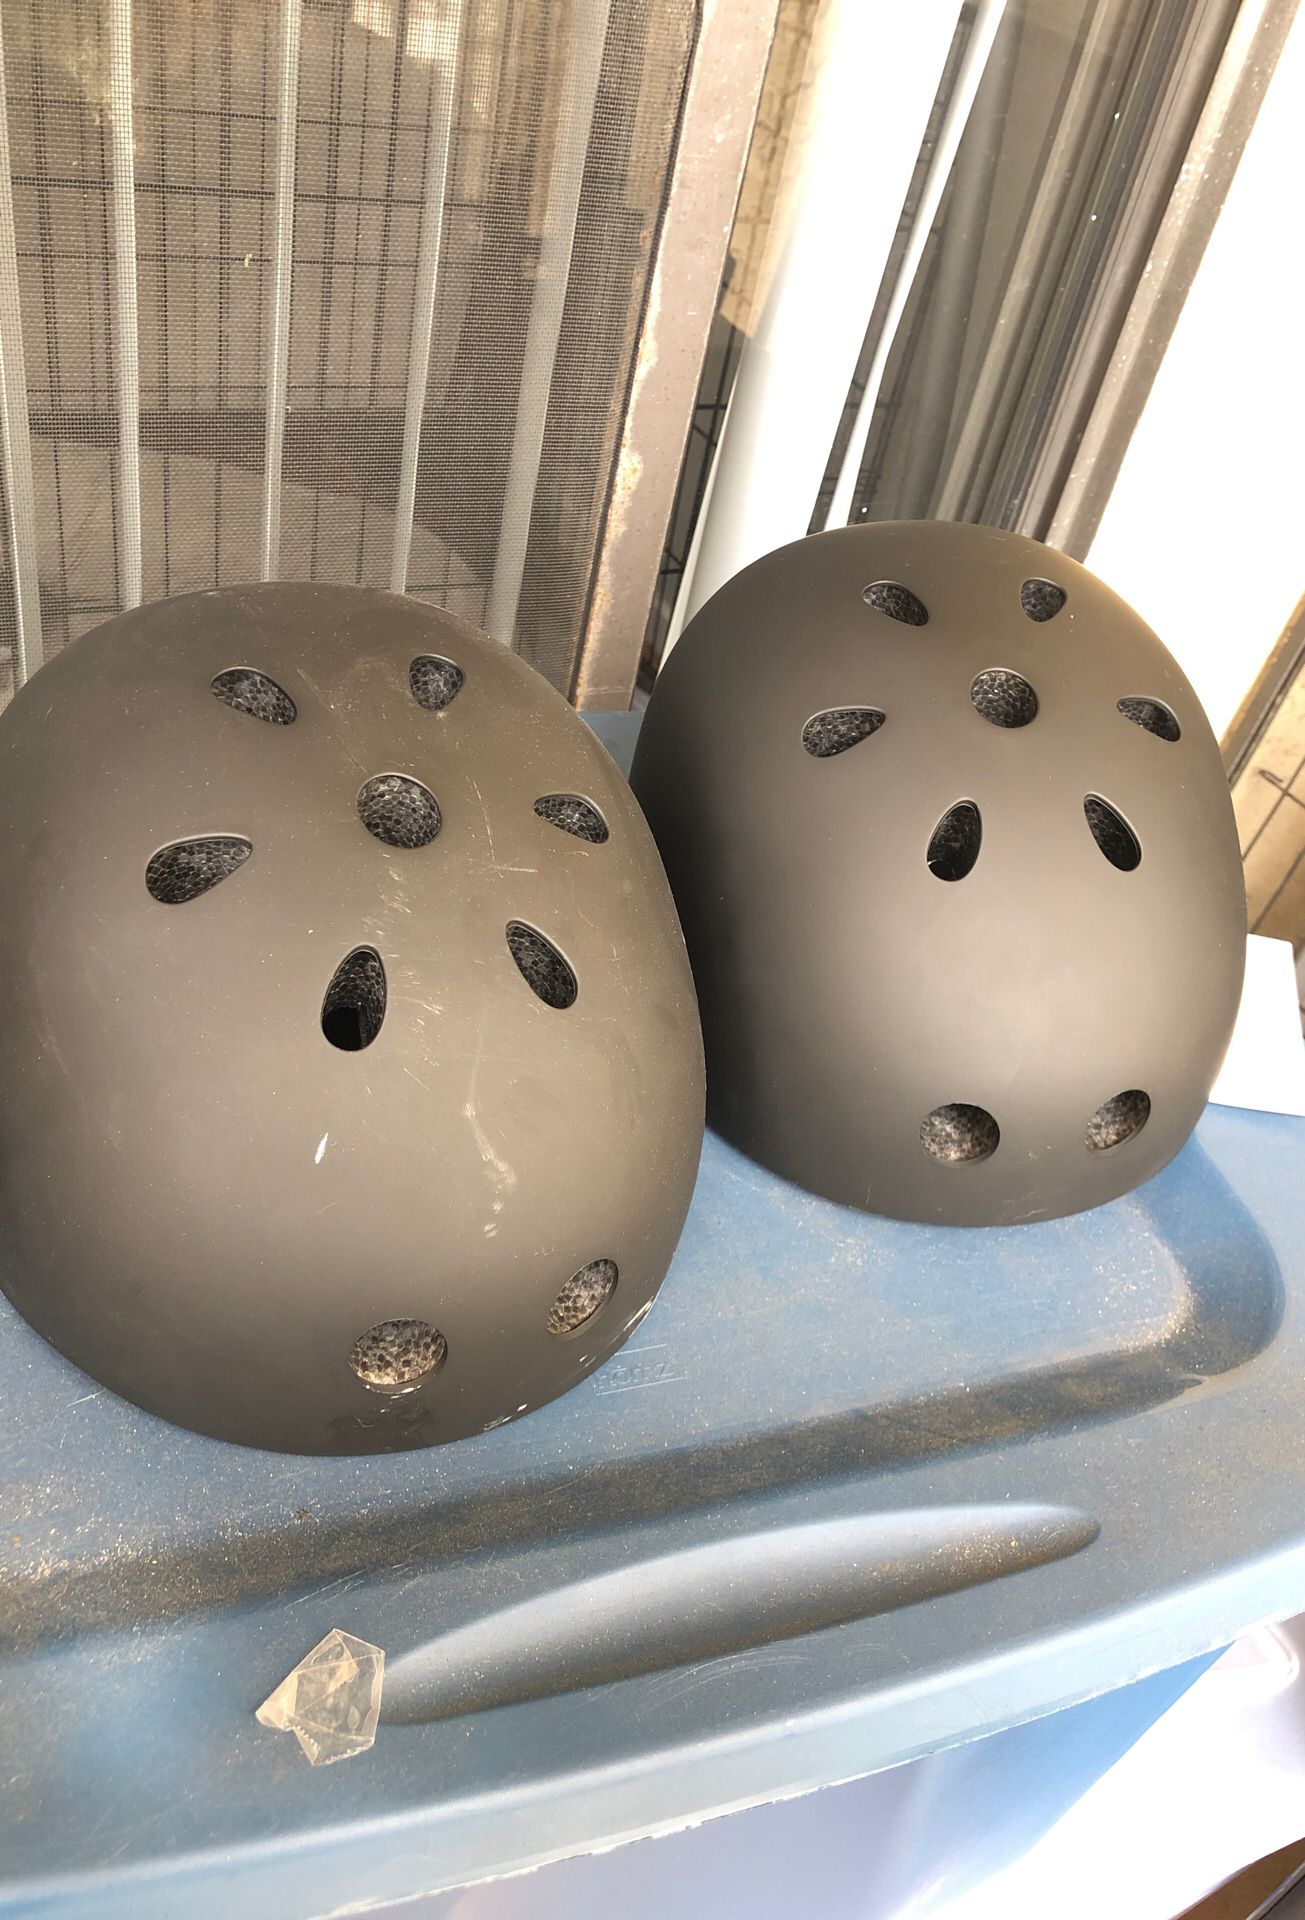 Two helmets